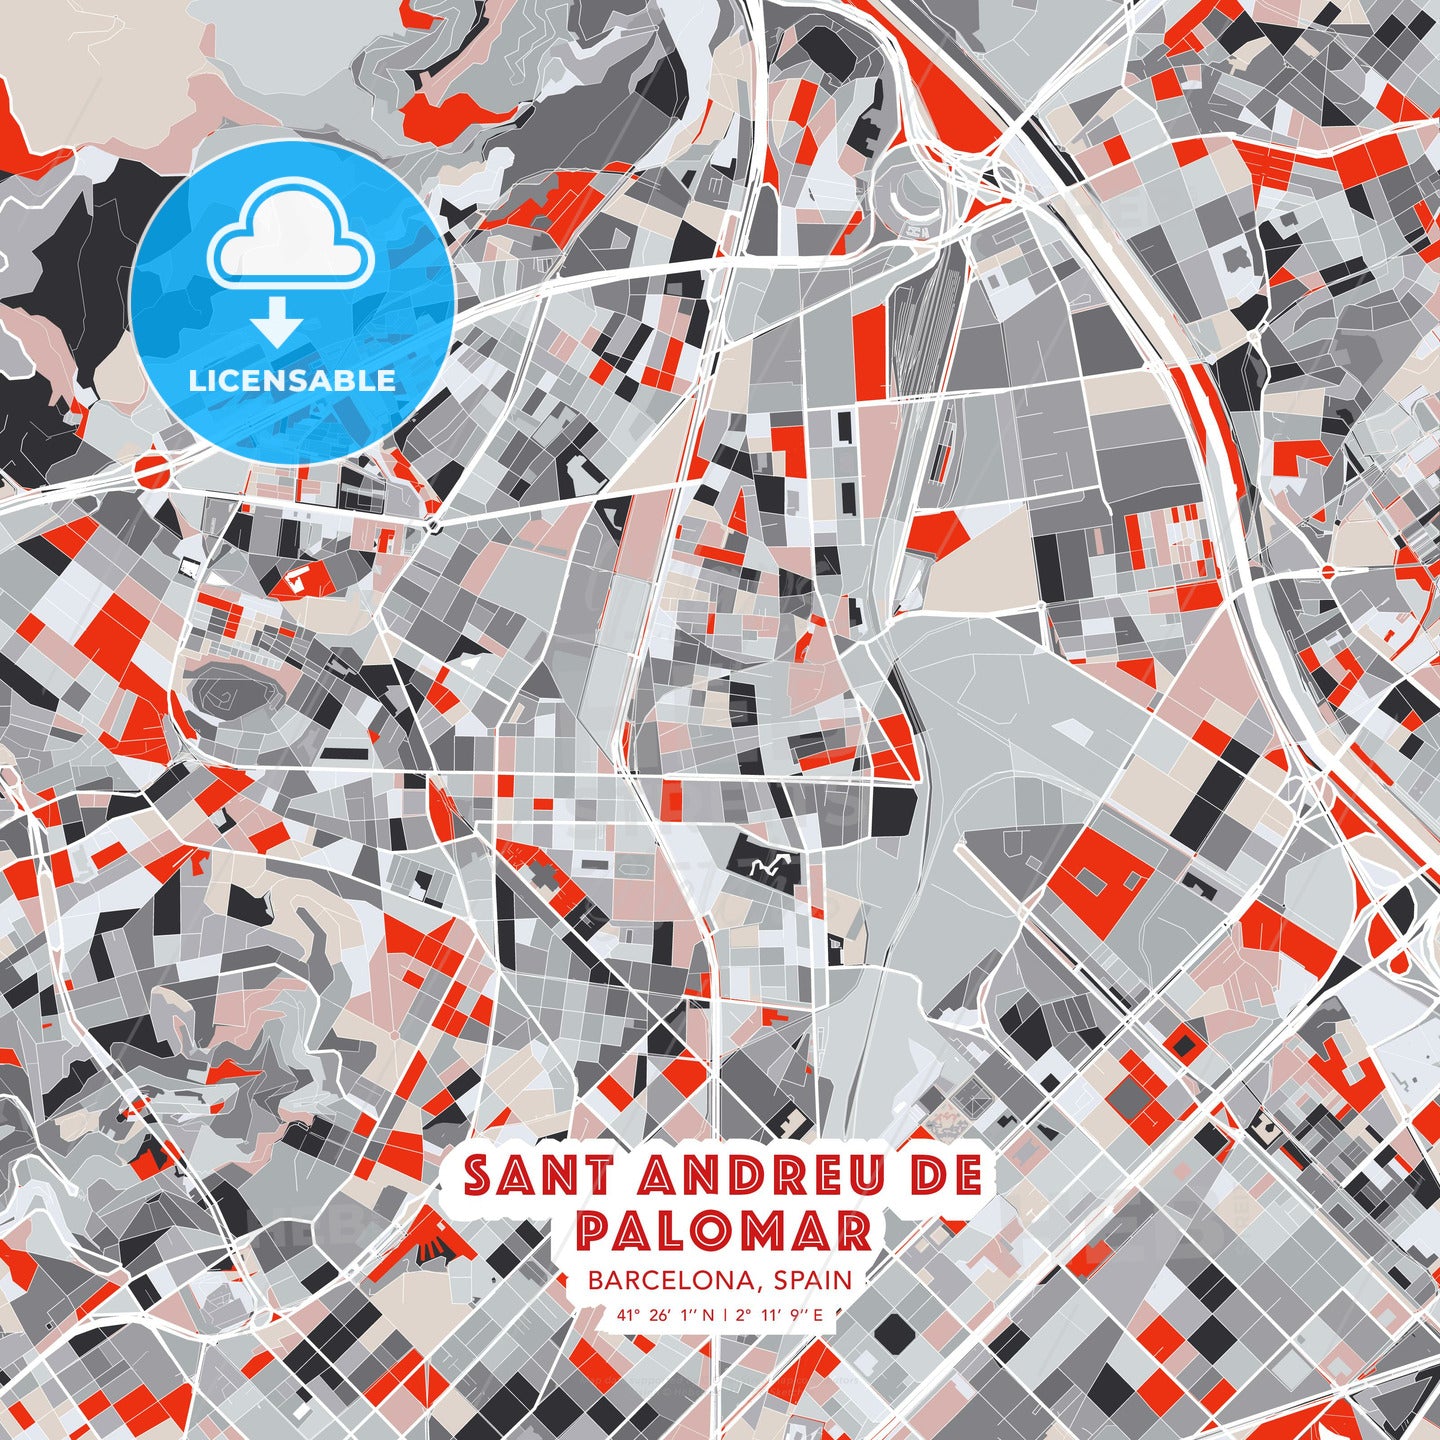 Sant Andreu de Palomar, Barcelona, Spain, modern map - HEBSTREITS Sketches